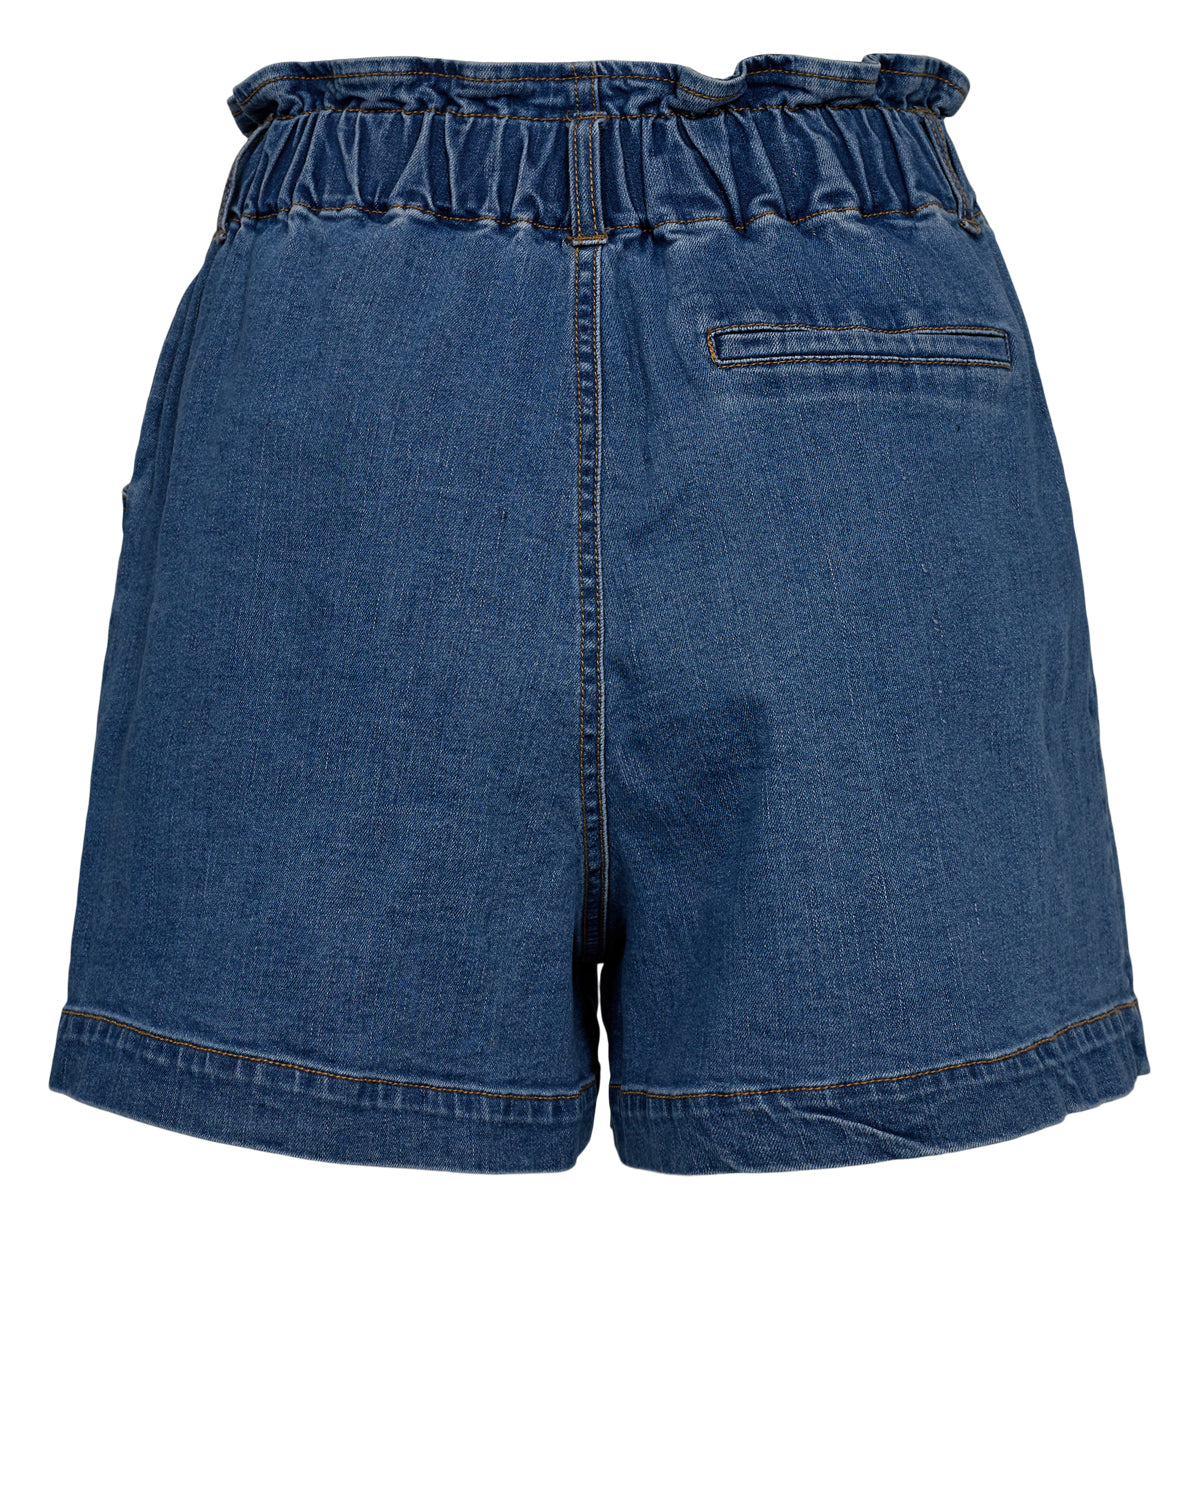 Numph nululu denim shorts - Medium blue denim